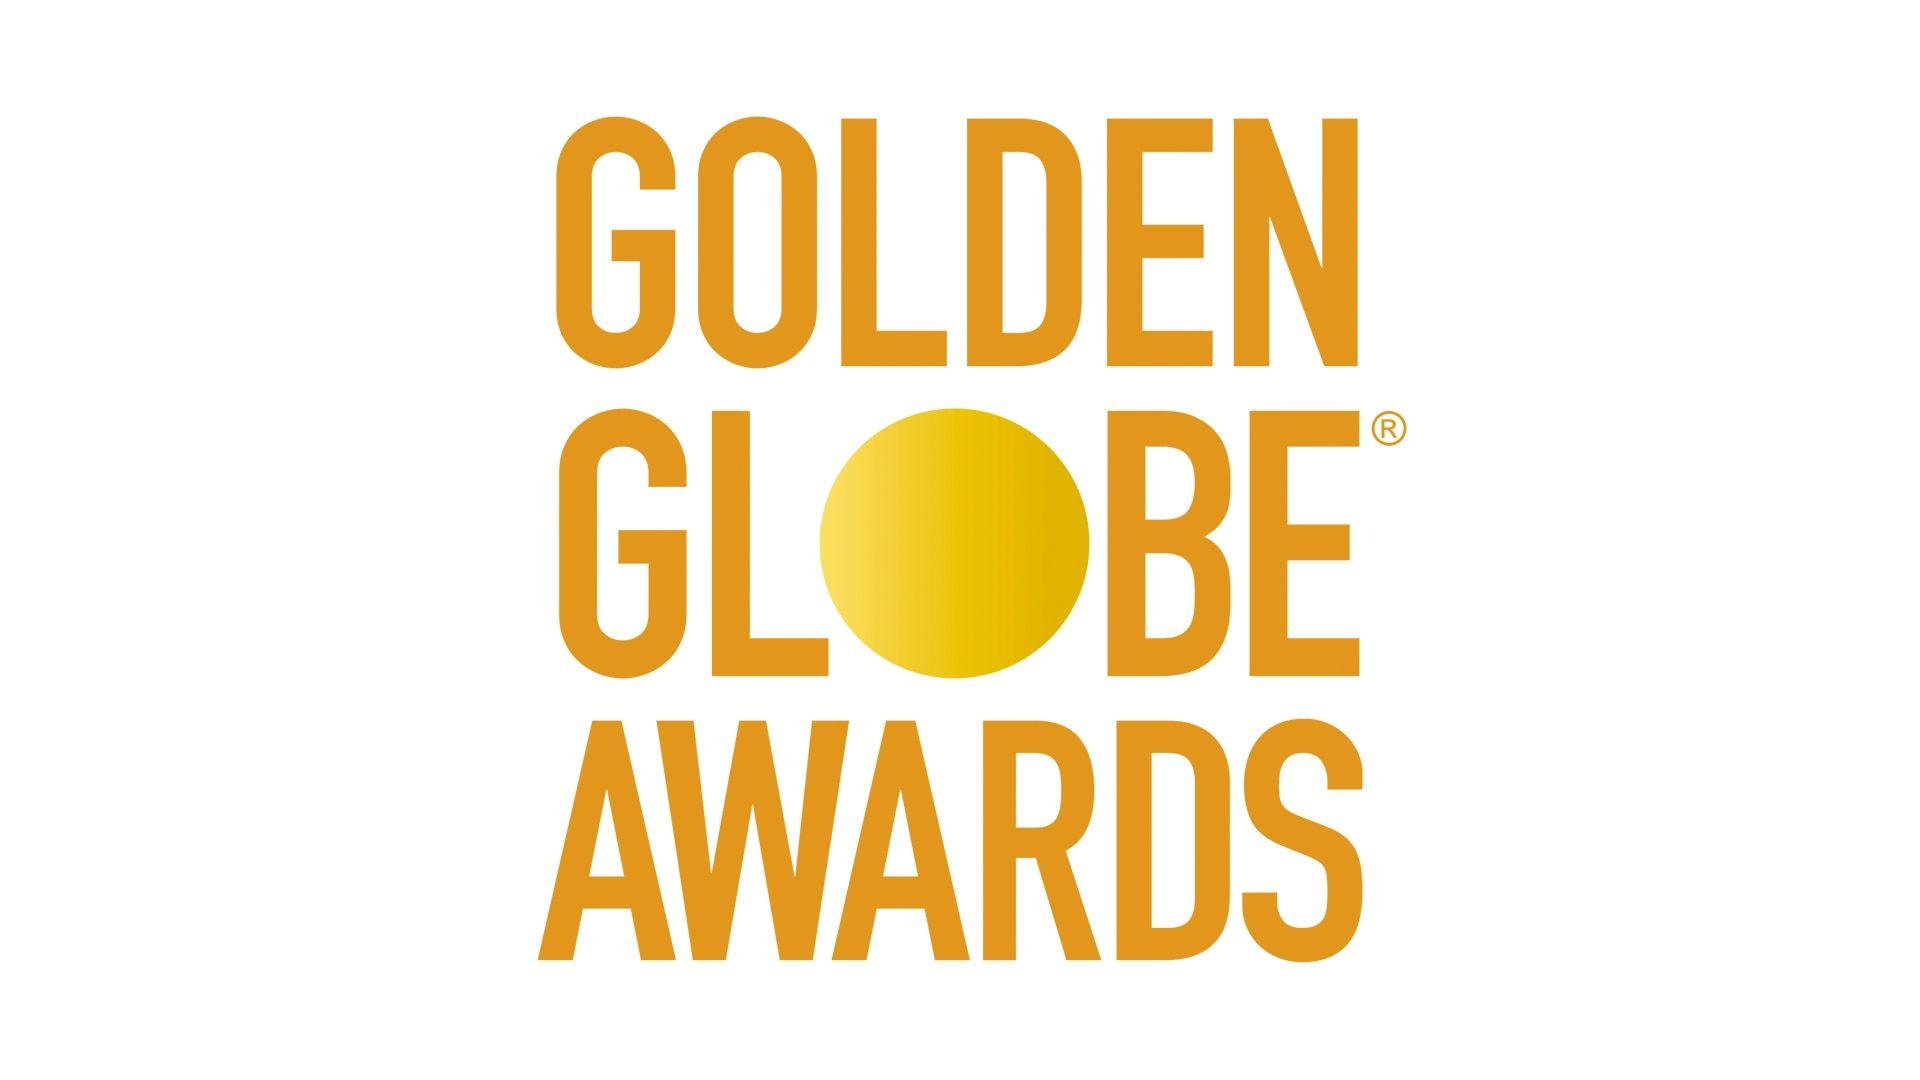 Golden Globes Logo - The Golden Globe Awards - NBC.com